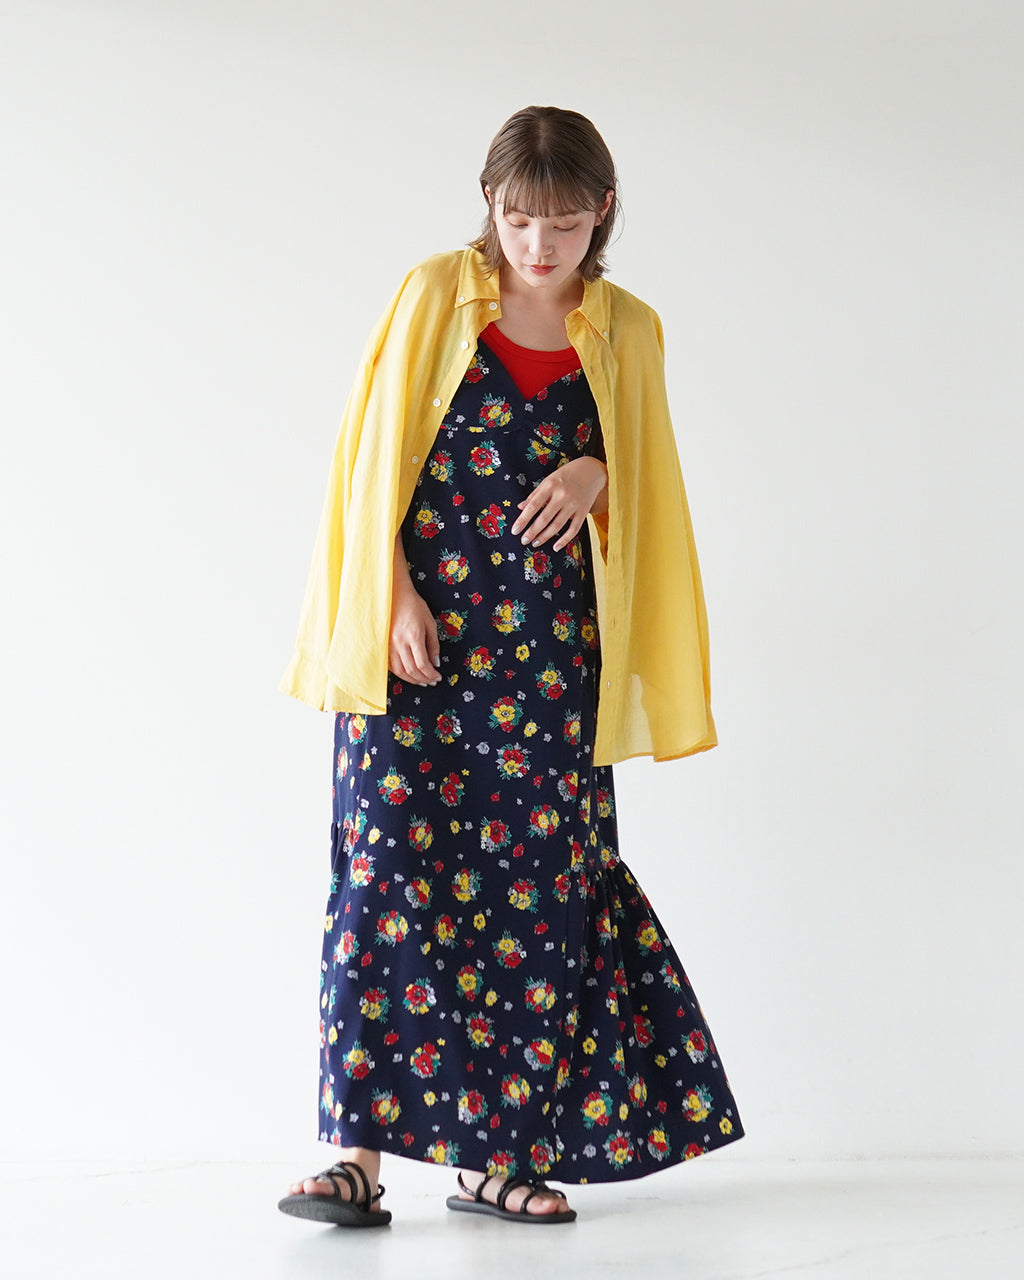 THE SHINZONE シンゾーン ポッピー ドレス POPPY DRESS キャミソールワンピース 24MMSOP07【送料無料】